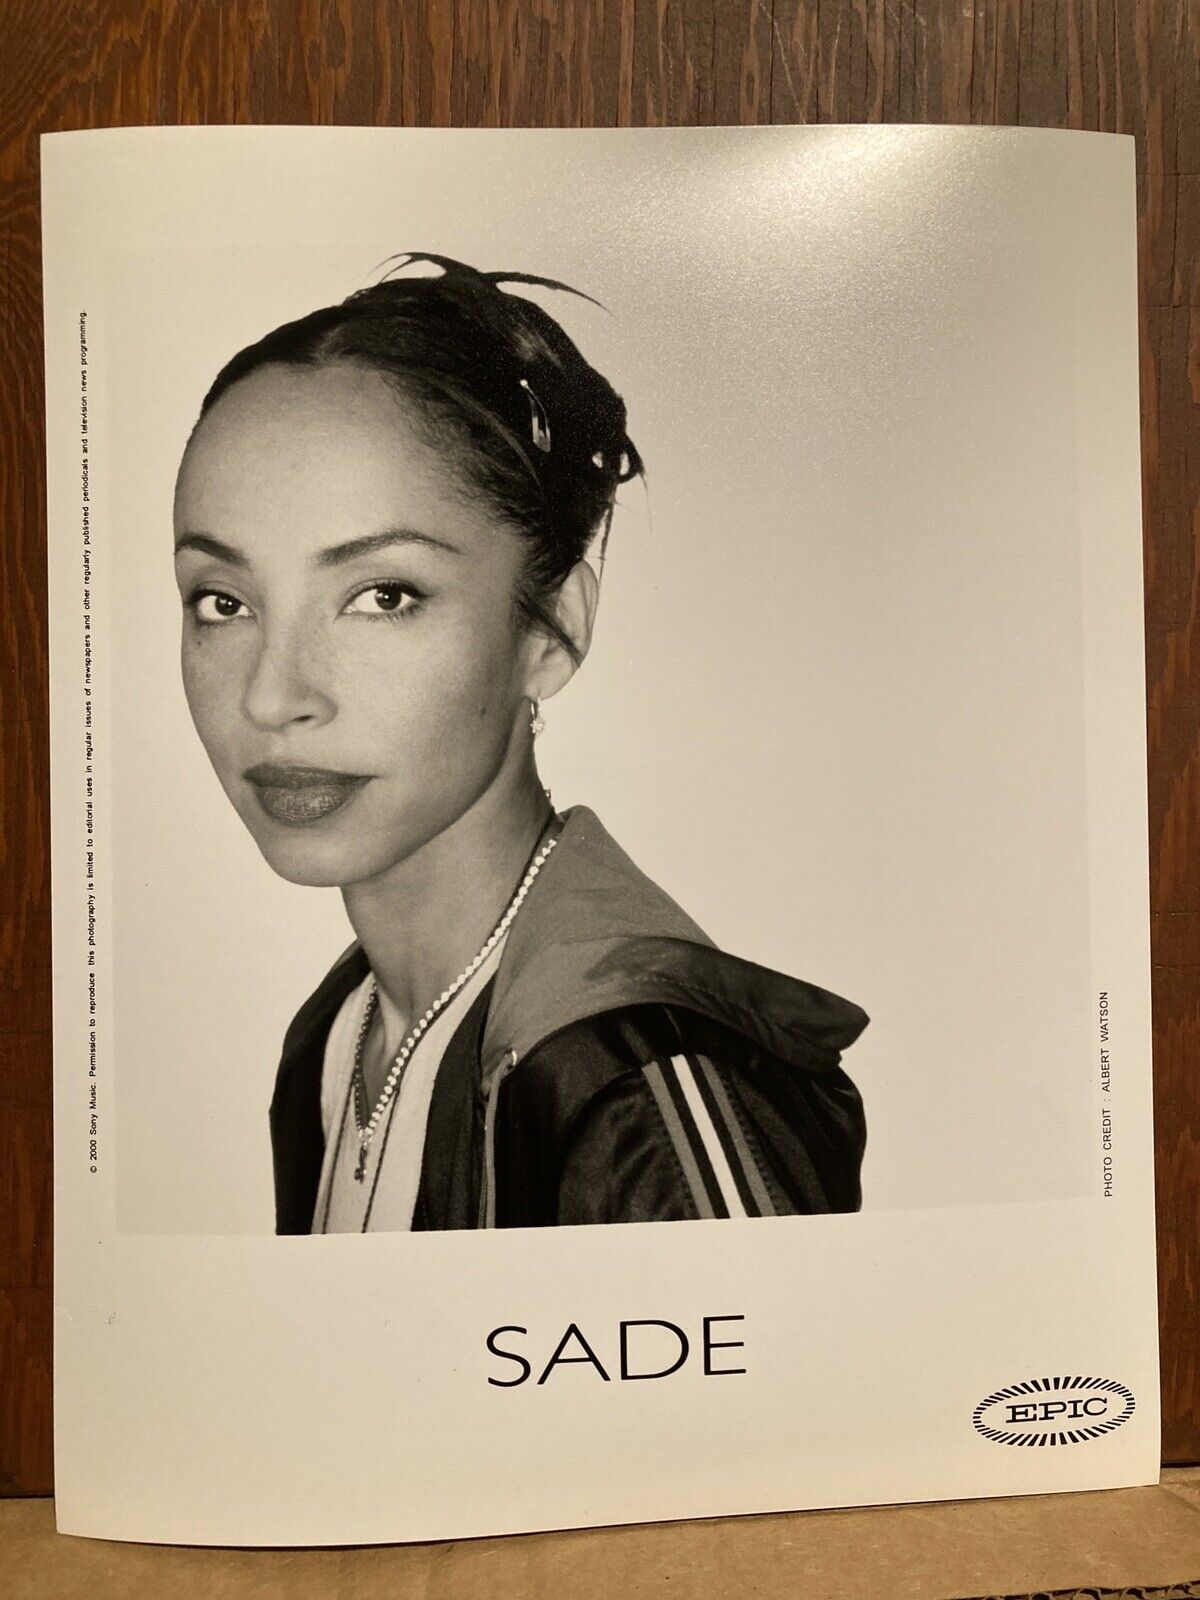 Sade Media Press Photo 8x10 Epic Records